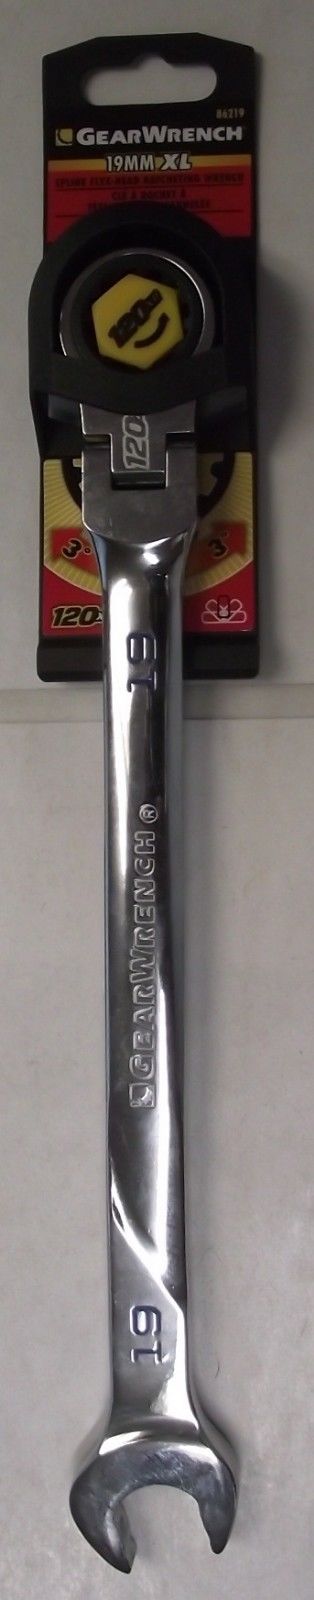 Gearwrench 86219 120XP 19mm Spline XL Flex-Head Combination Ratcheting Wrench